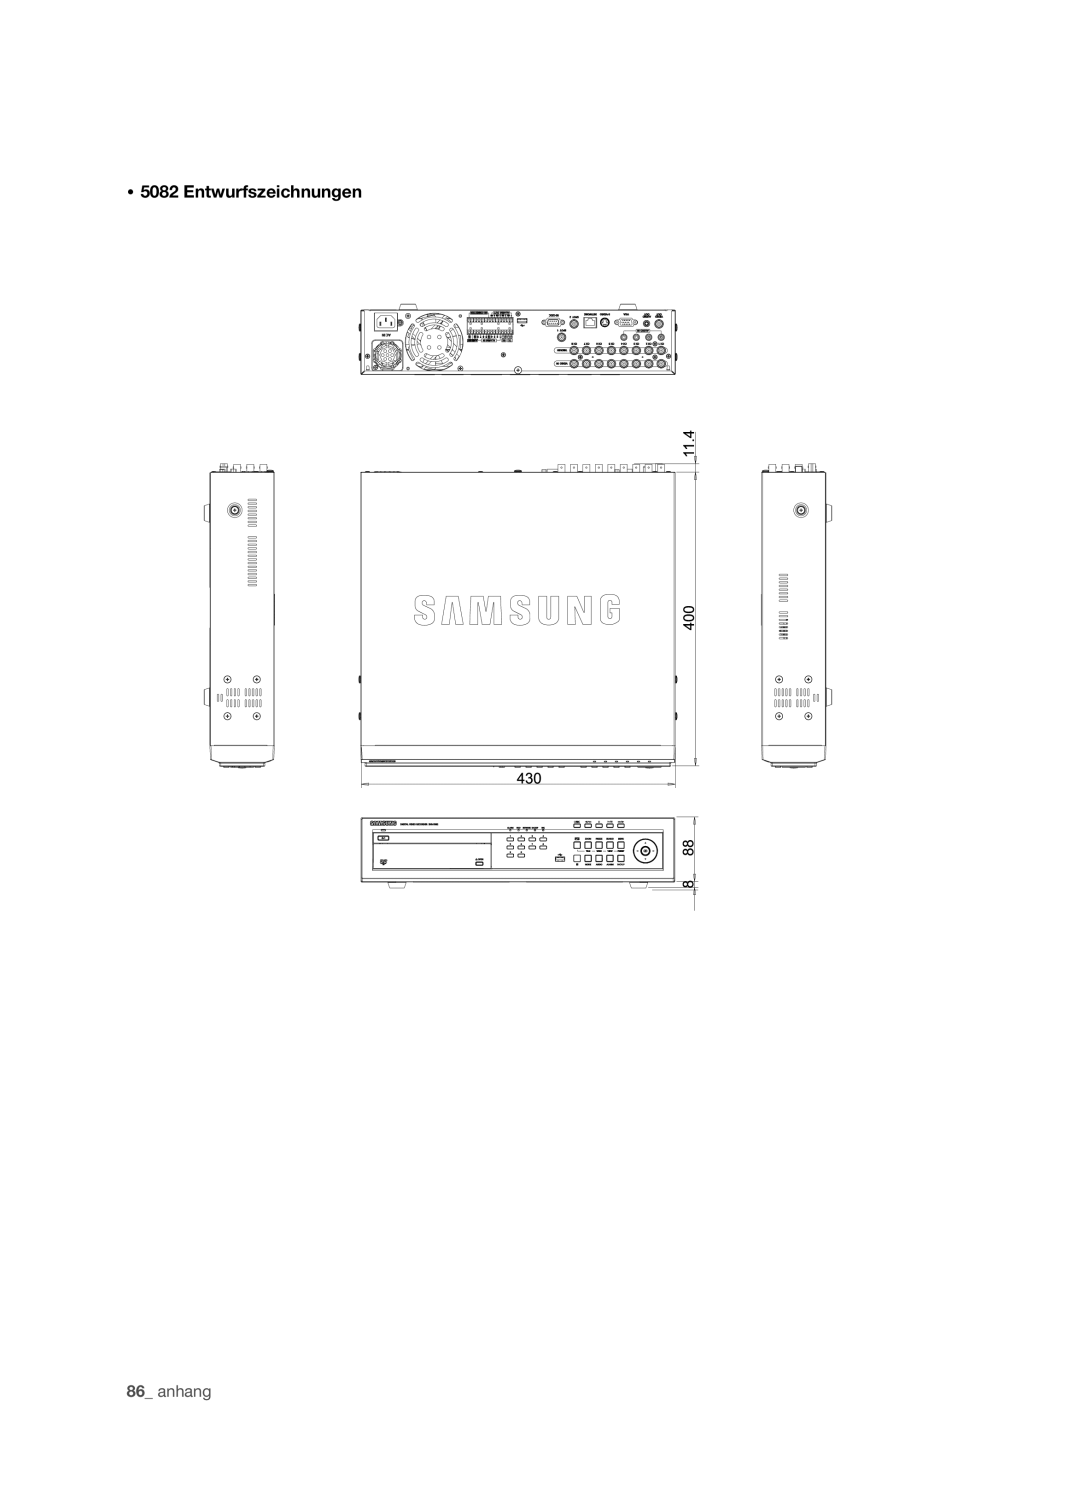 Samsung SHR-5082P/XEG, SHR-5160P, SHR-5162P/XEG, SHR-5080P manual  5082 Entwurfszeichnungen, anhang 